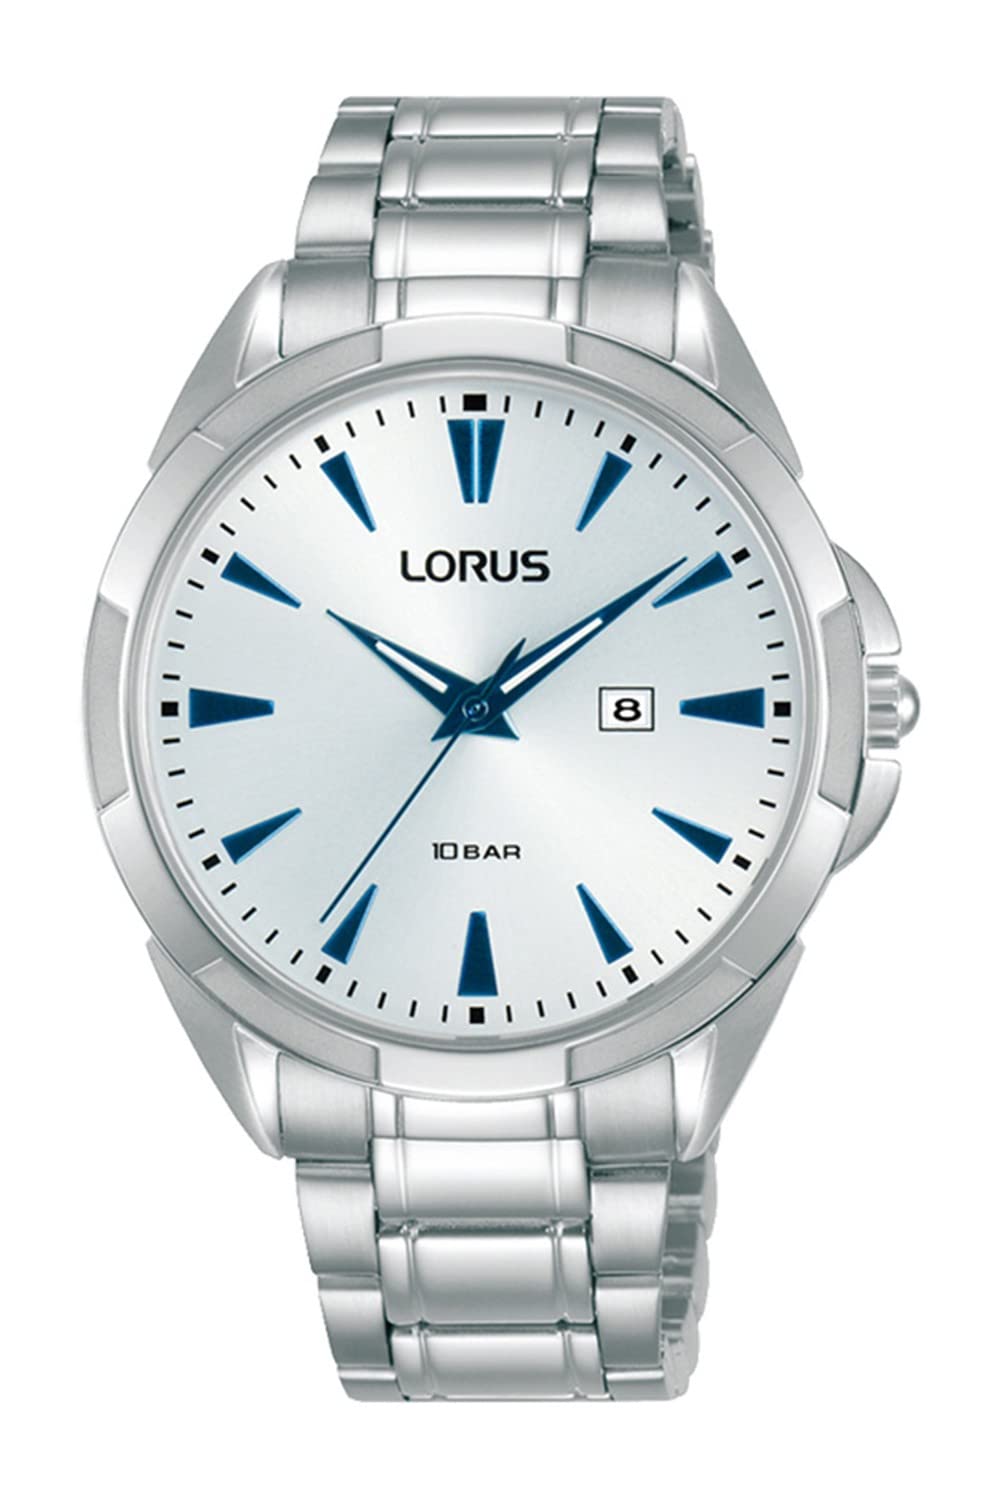 Lorus Woman Womens Analog Quartz Watch with Stainless Steel Bracelet RJ259BX9